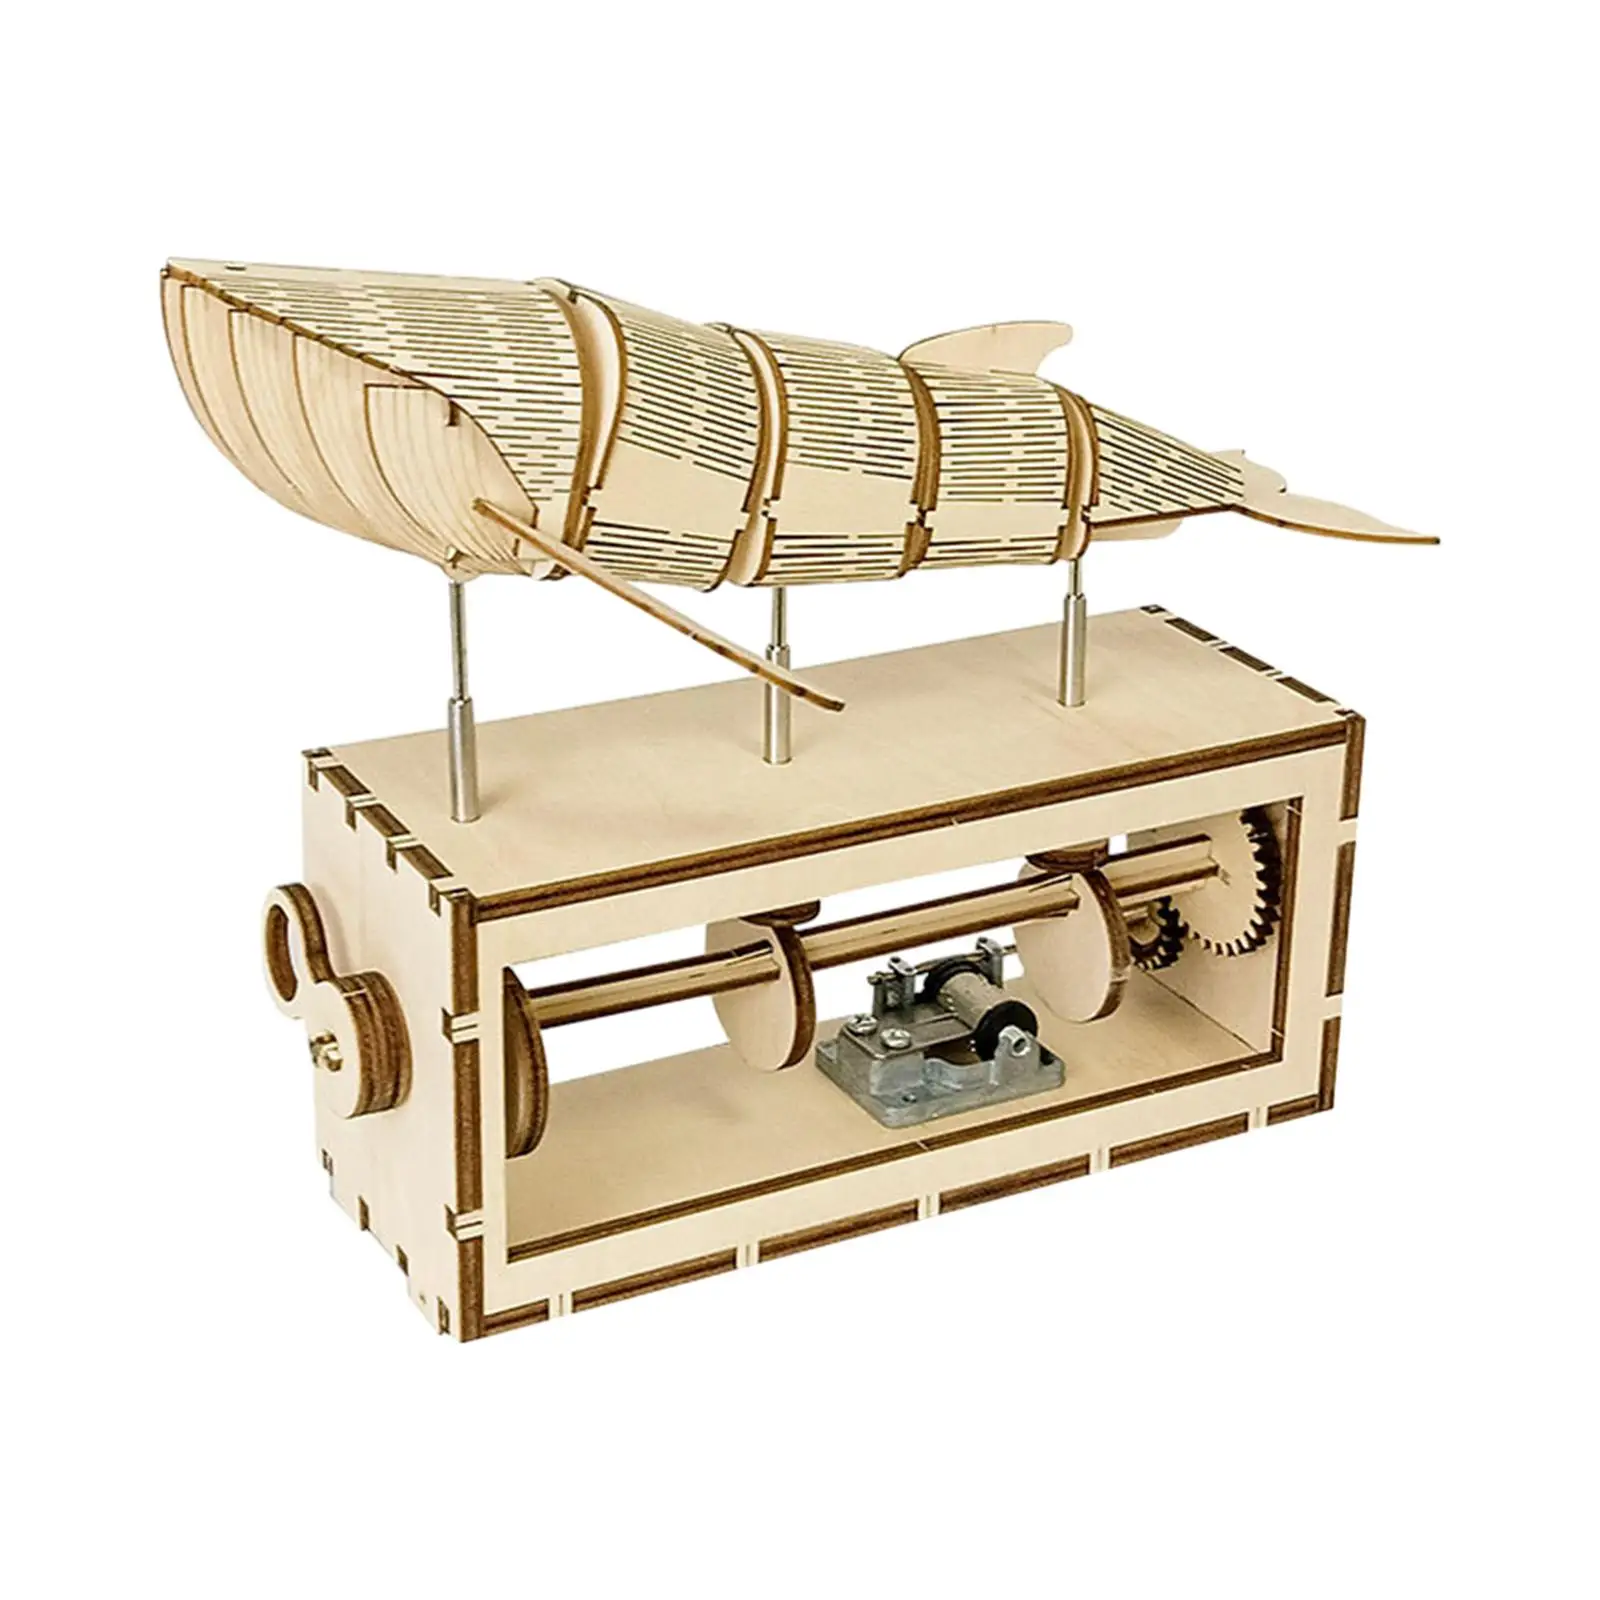 3D Wooden Puzzle Hand Crank Music Box Mechanical Music Box Crafts for Granddaughter Family Desktop Ornament Children Girlfriend